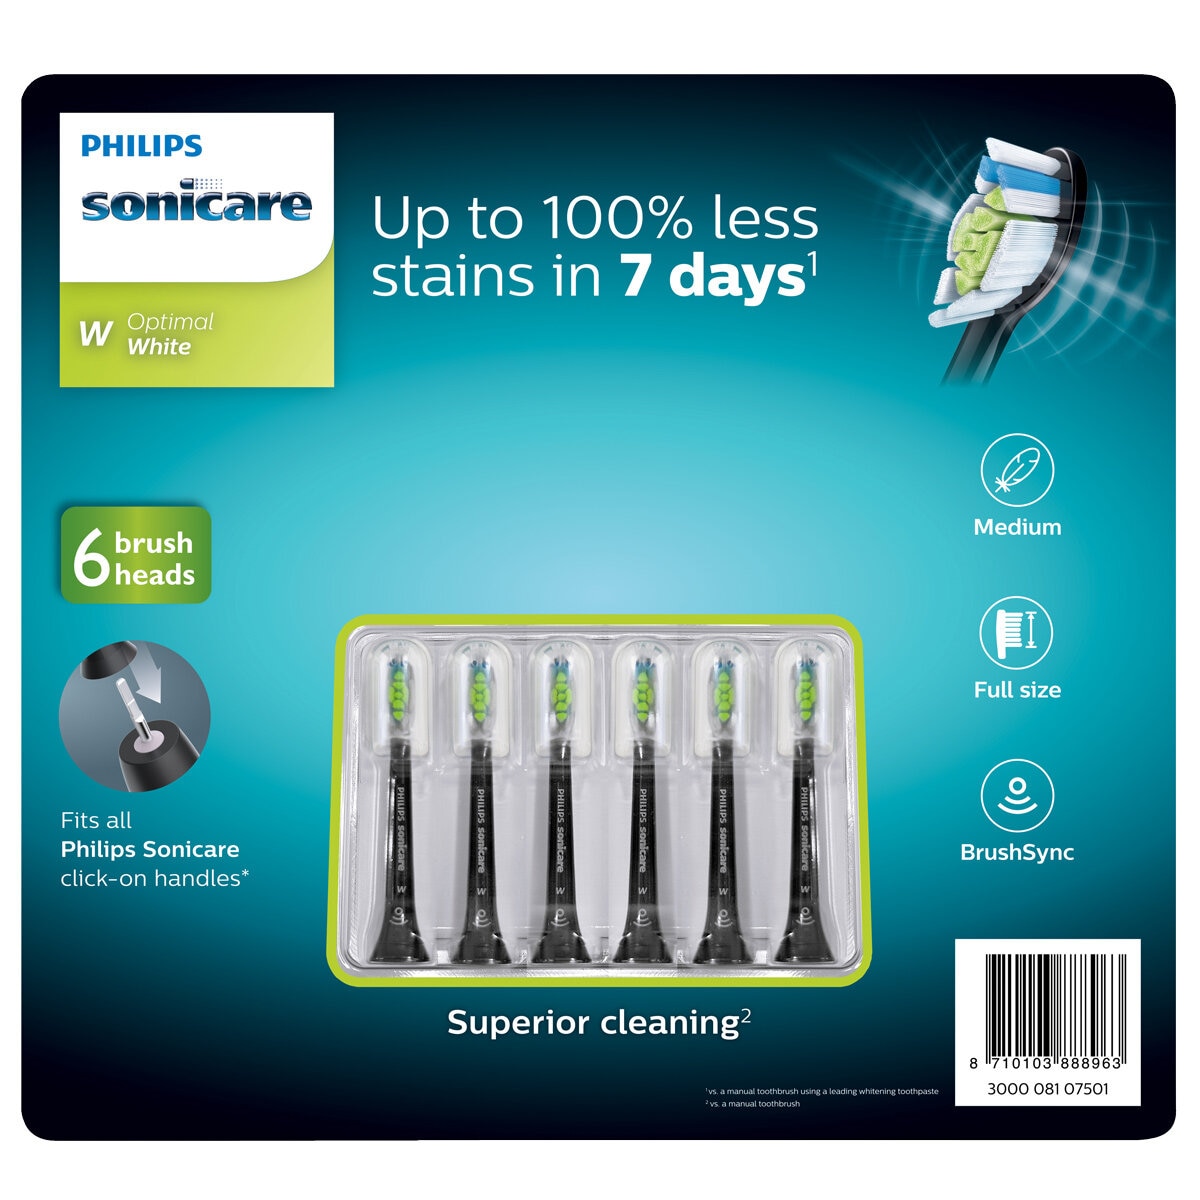 Philips Sonicare W2 Optimal White standard brush heads, 6 pack, Black